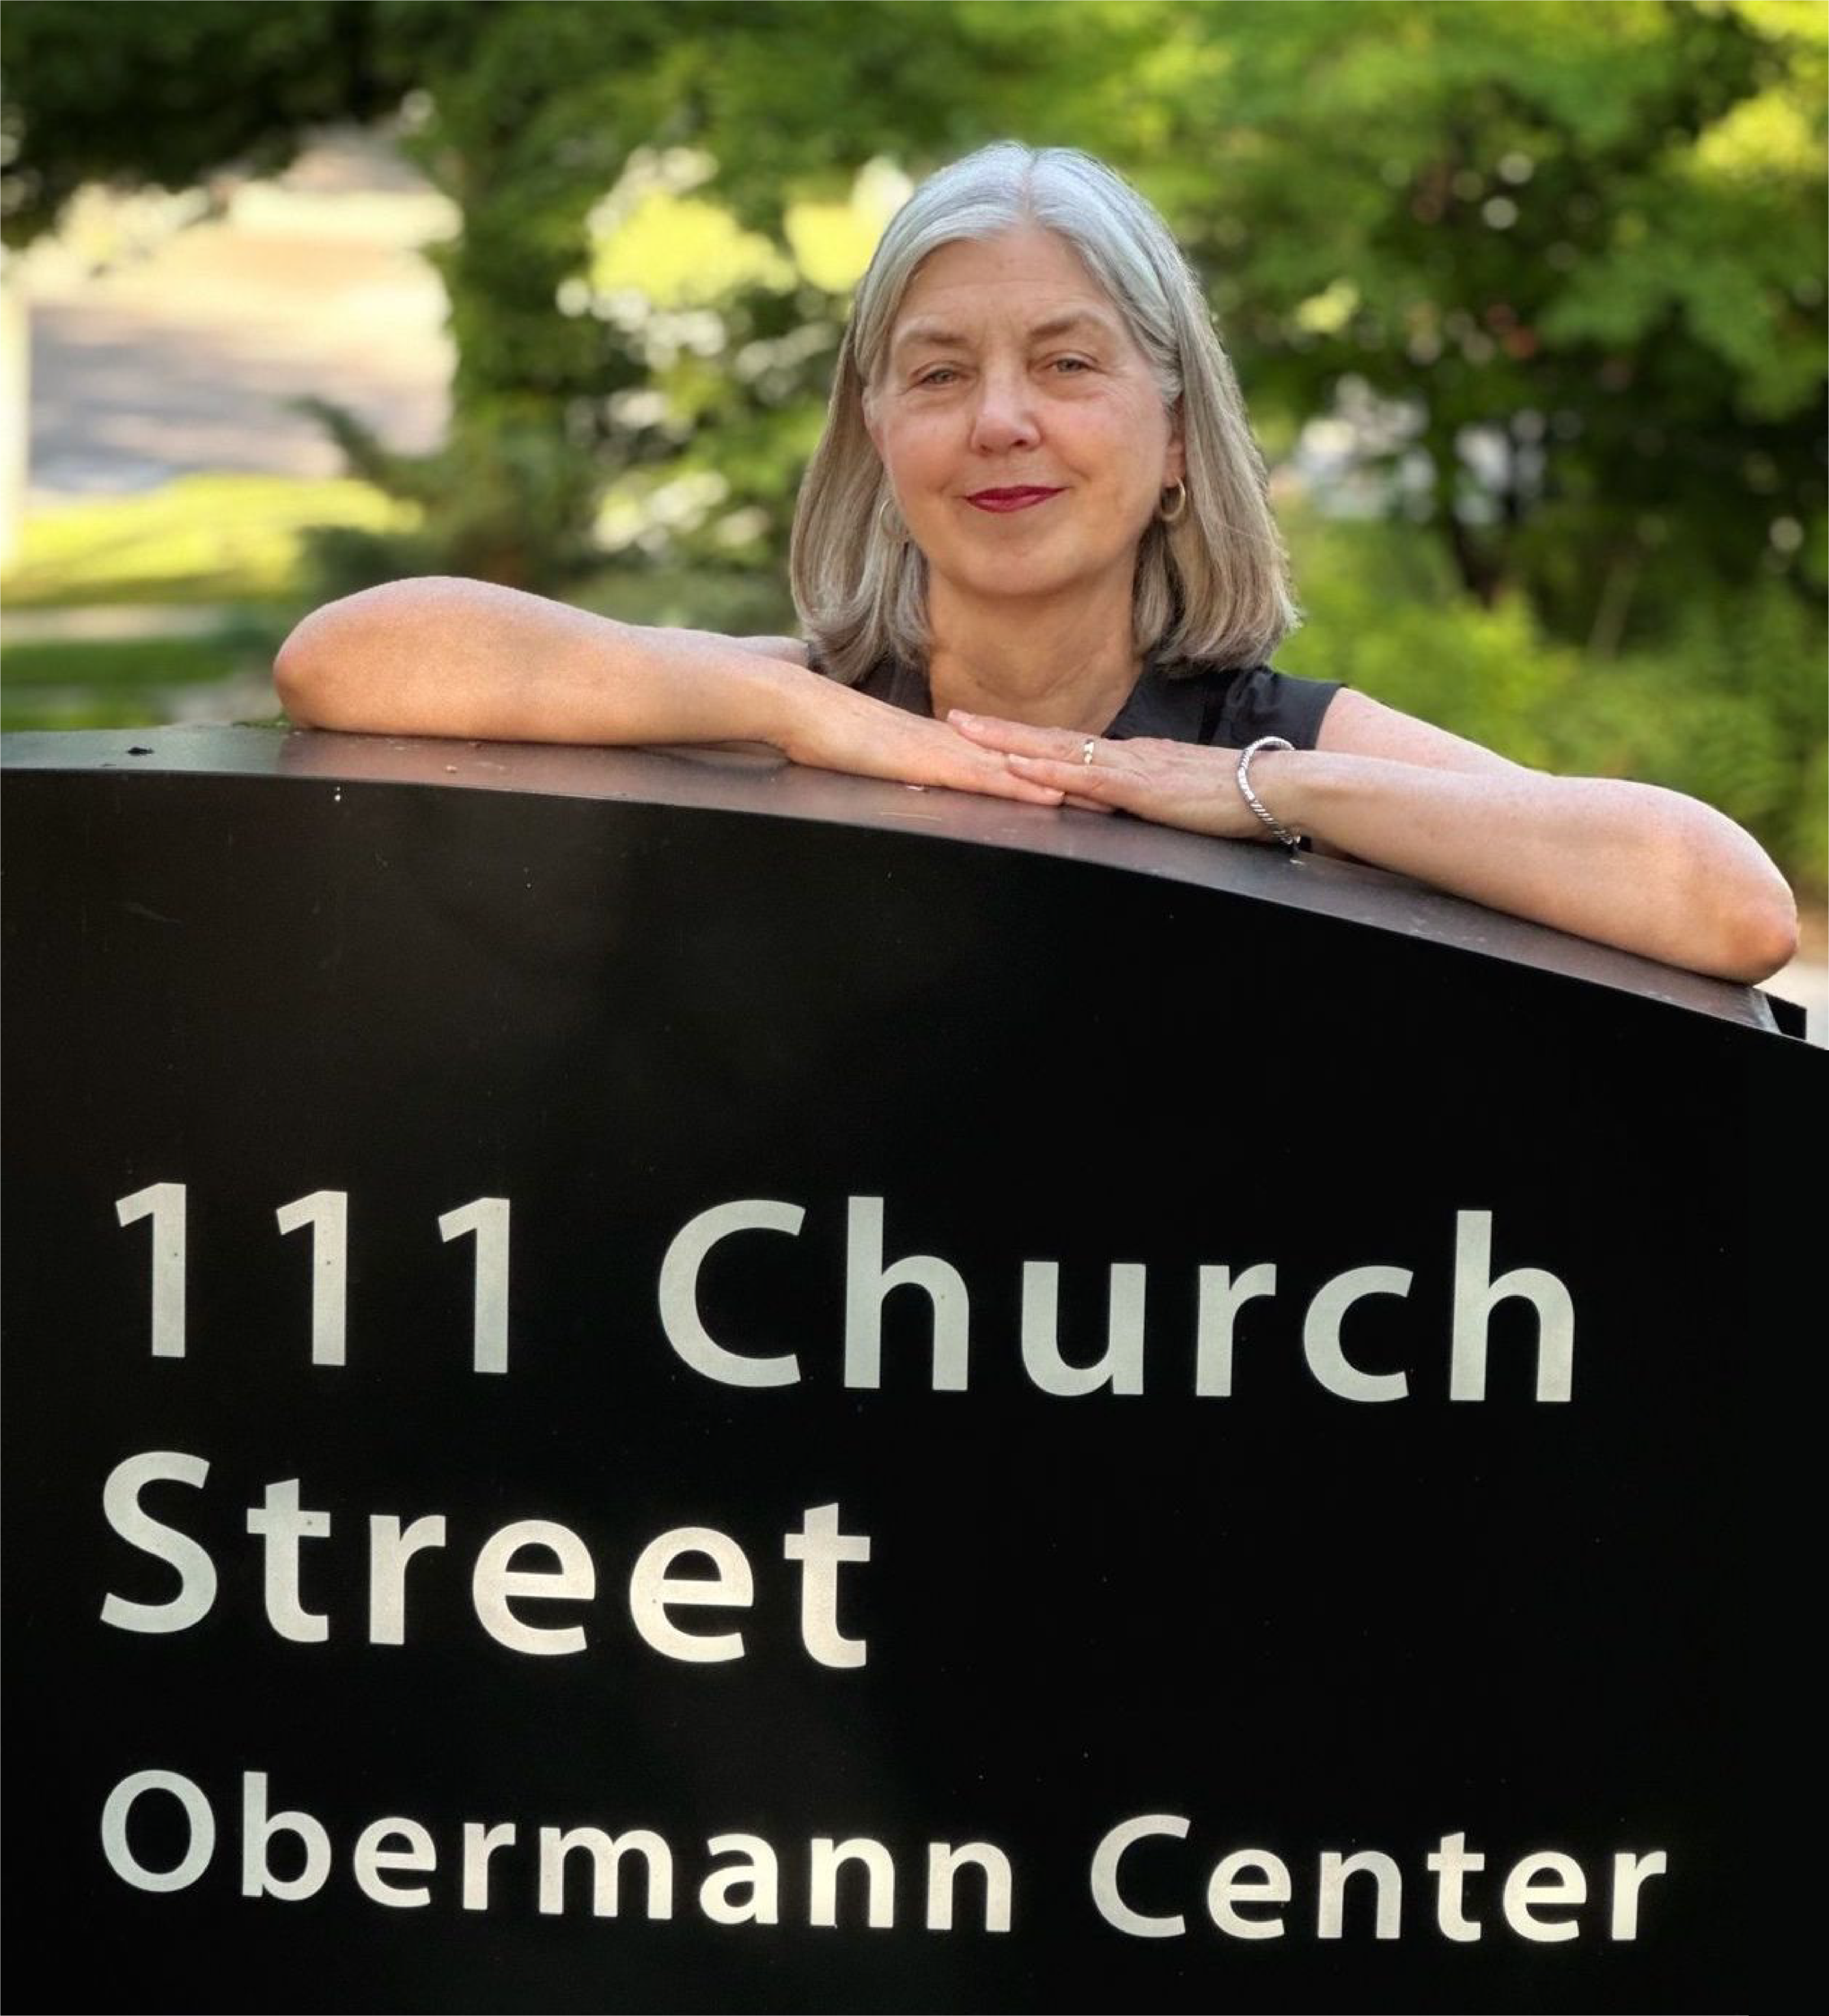 Teresa Mangum by Obermann Center signage